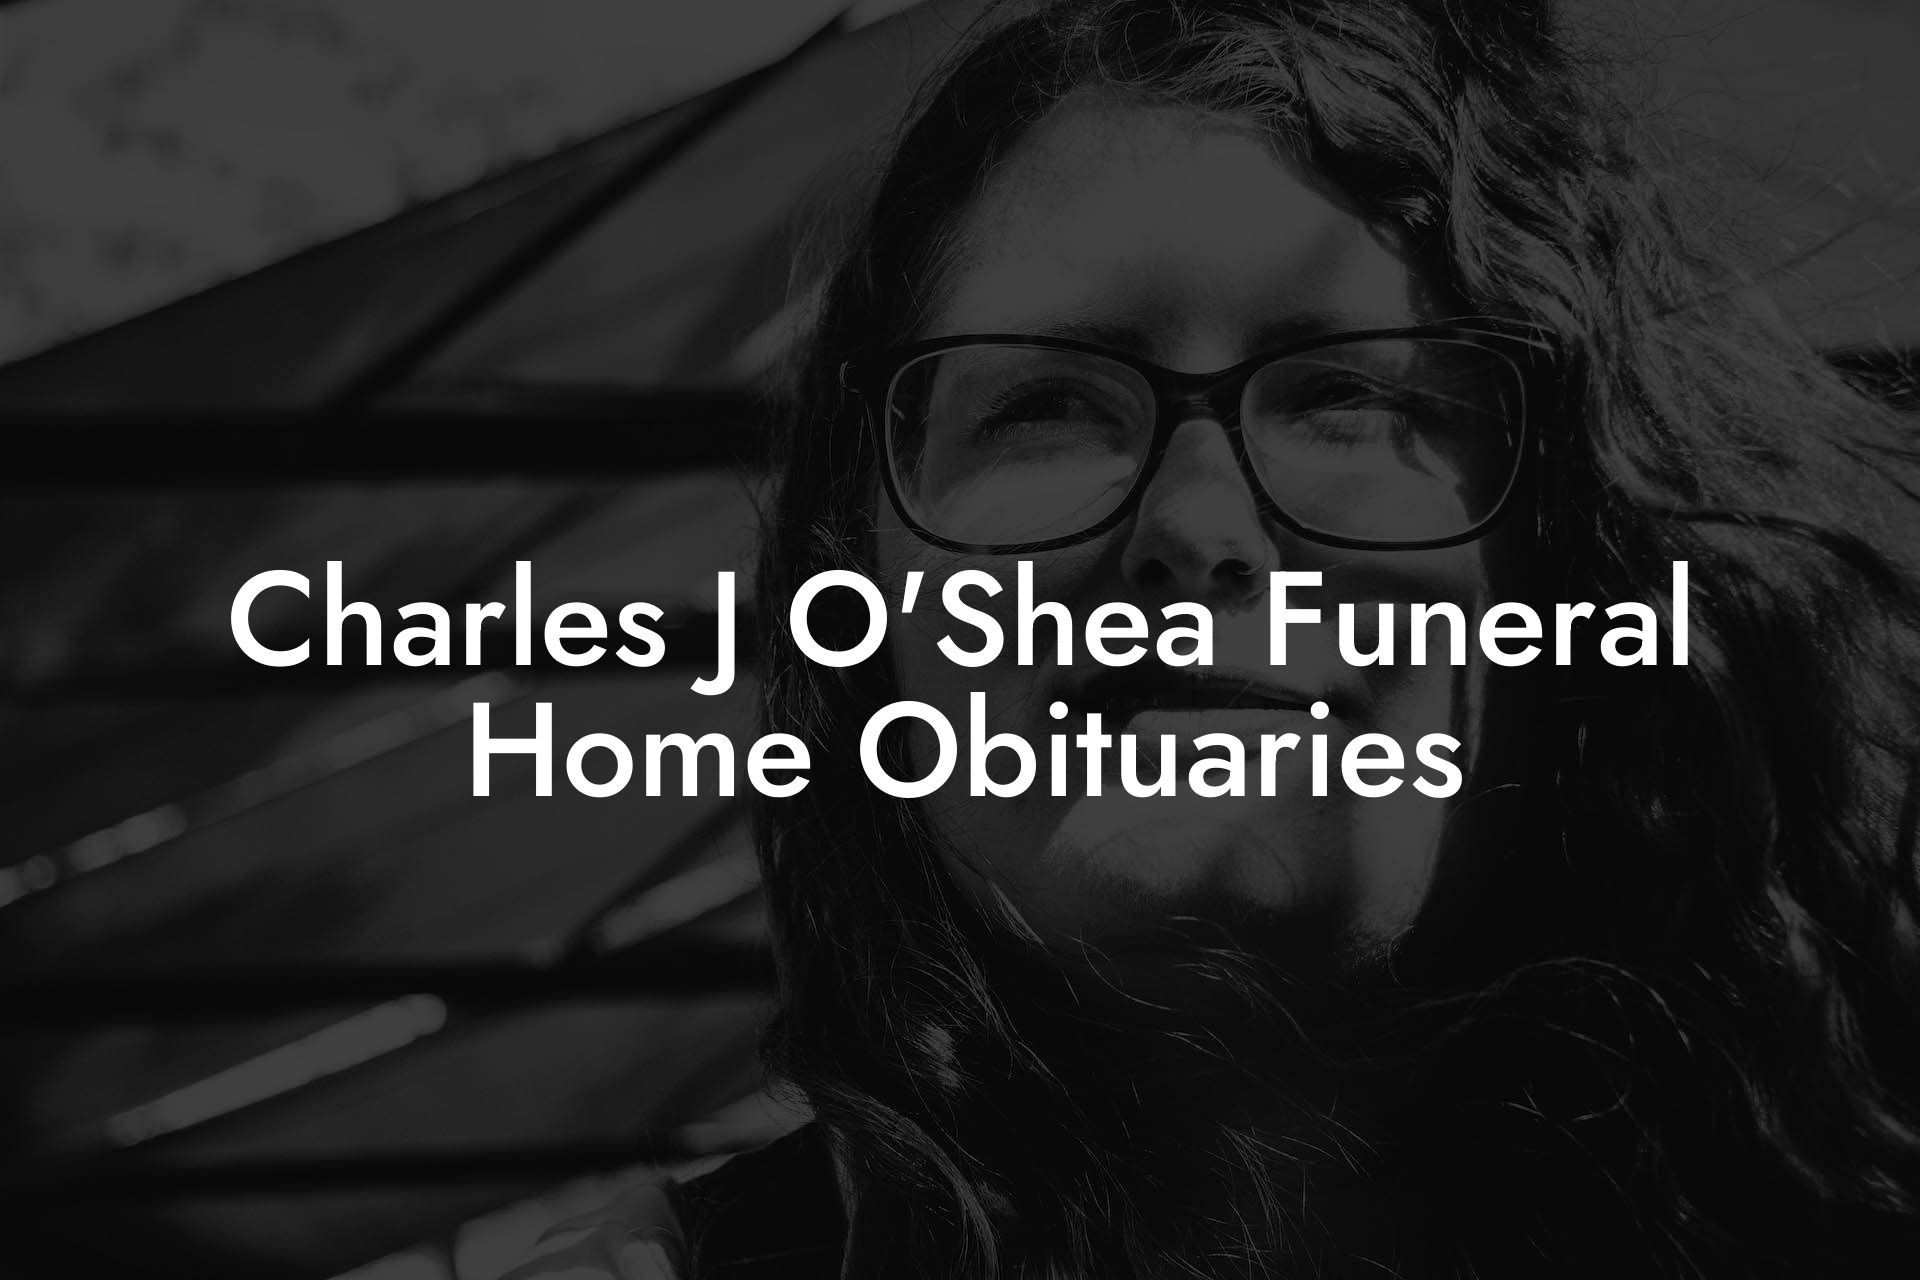 Charles J O'Shea Funeral Home Obituaries